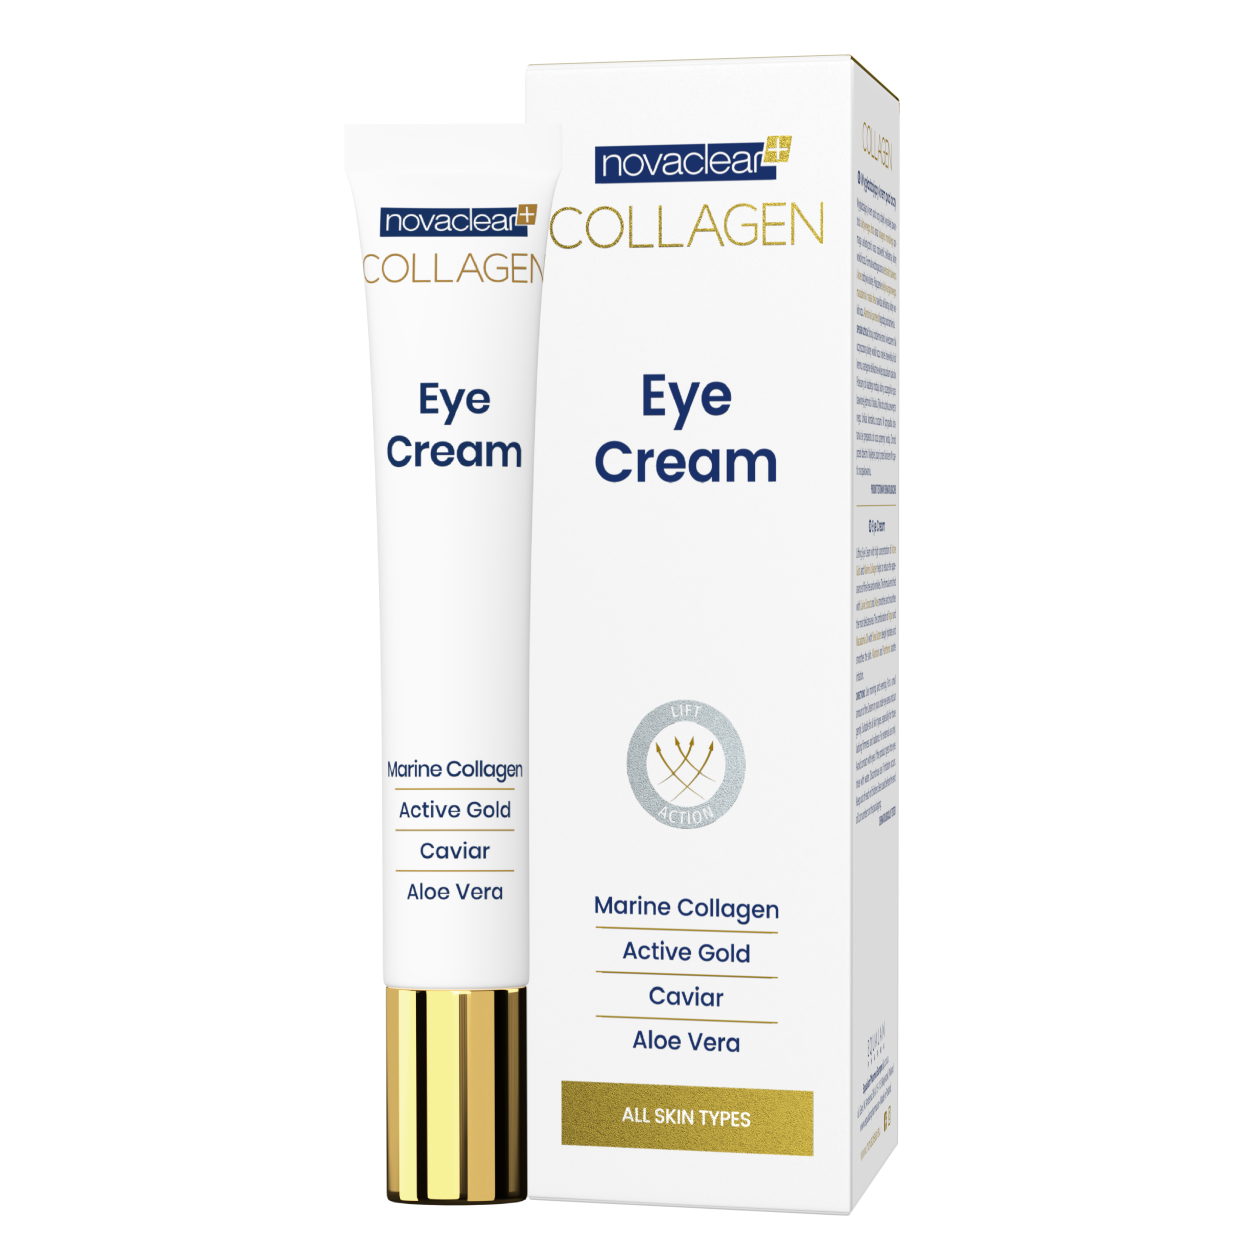 novaclear-collagen-eye-cream